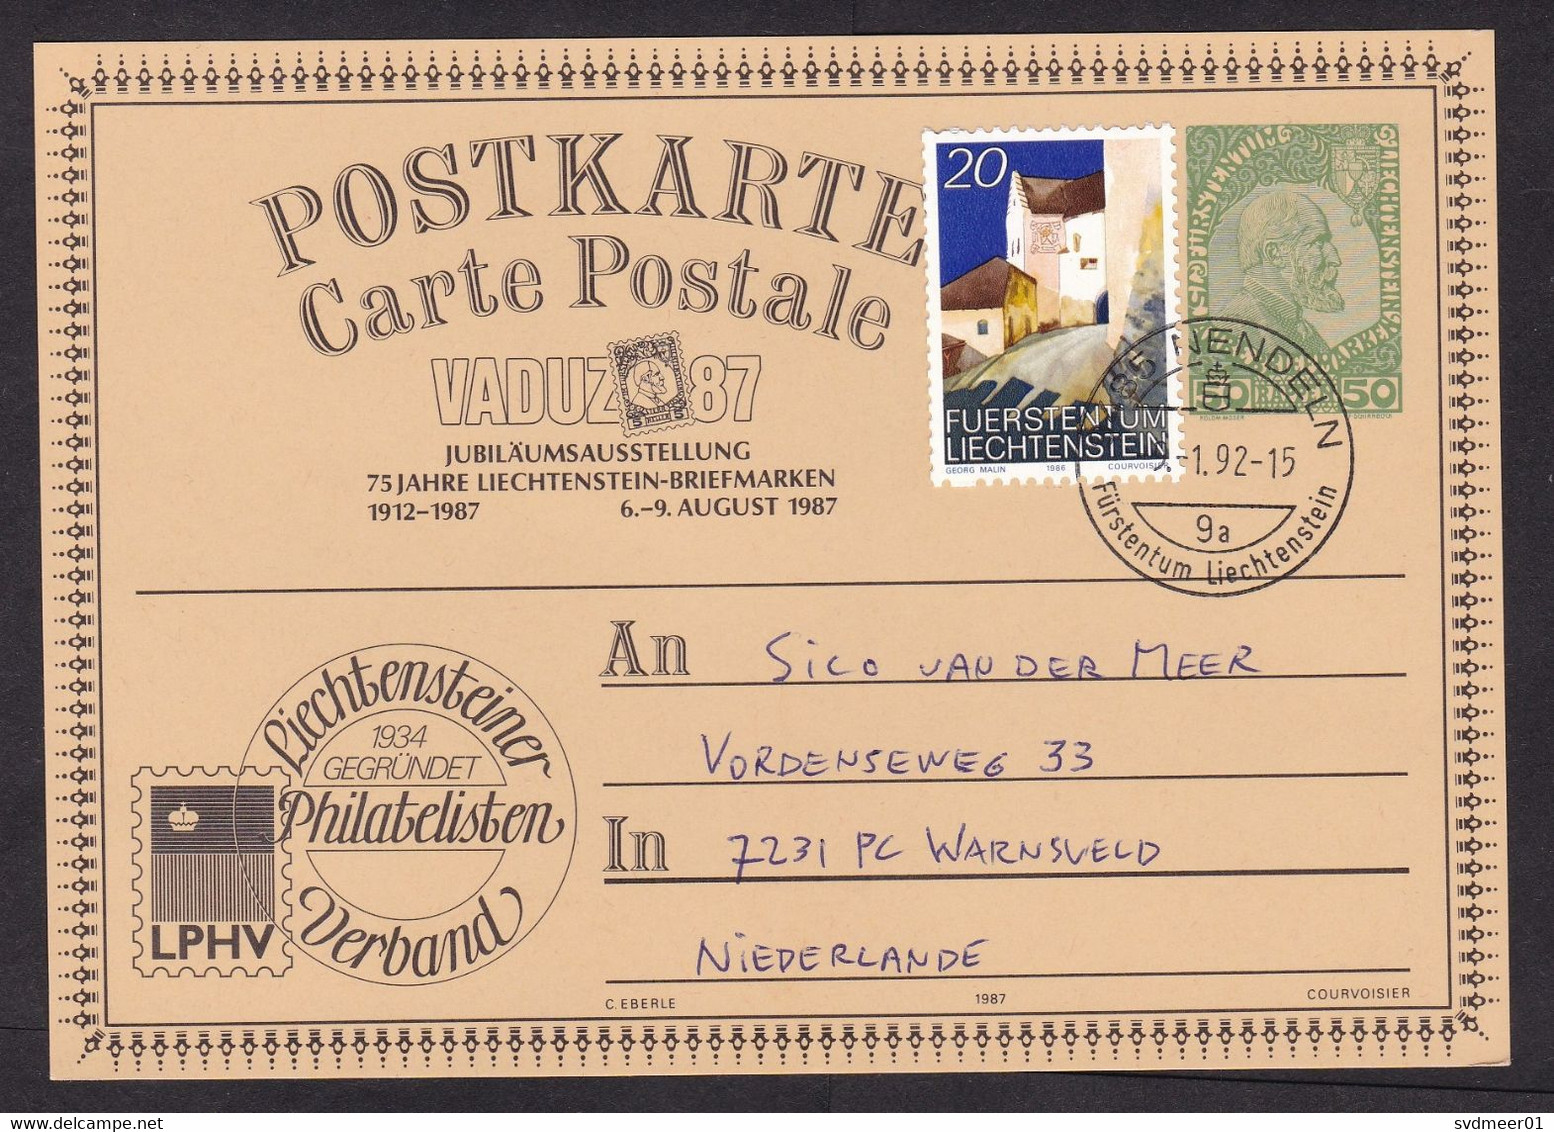 Liechtenstein: Stationery Postcard To Netherlands, 1992, 1 Extra Stamp, Philately, Postal History (traces Of Use) - Storia Postale